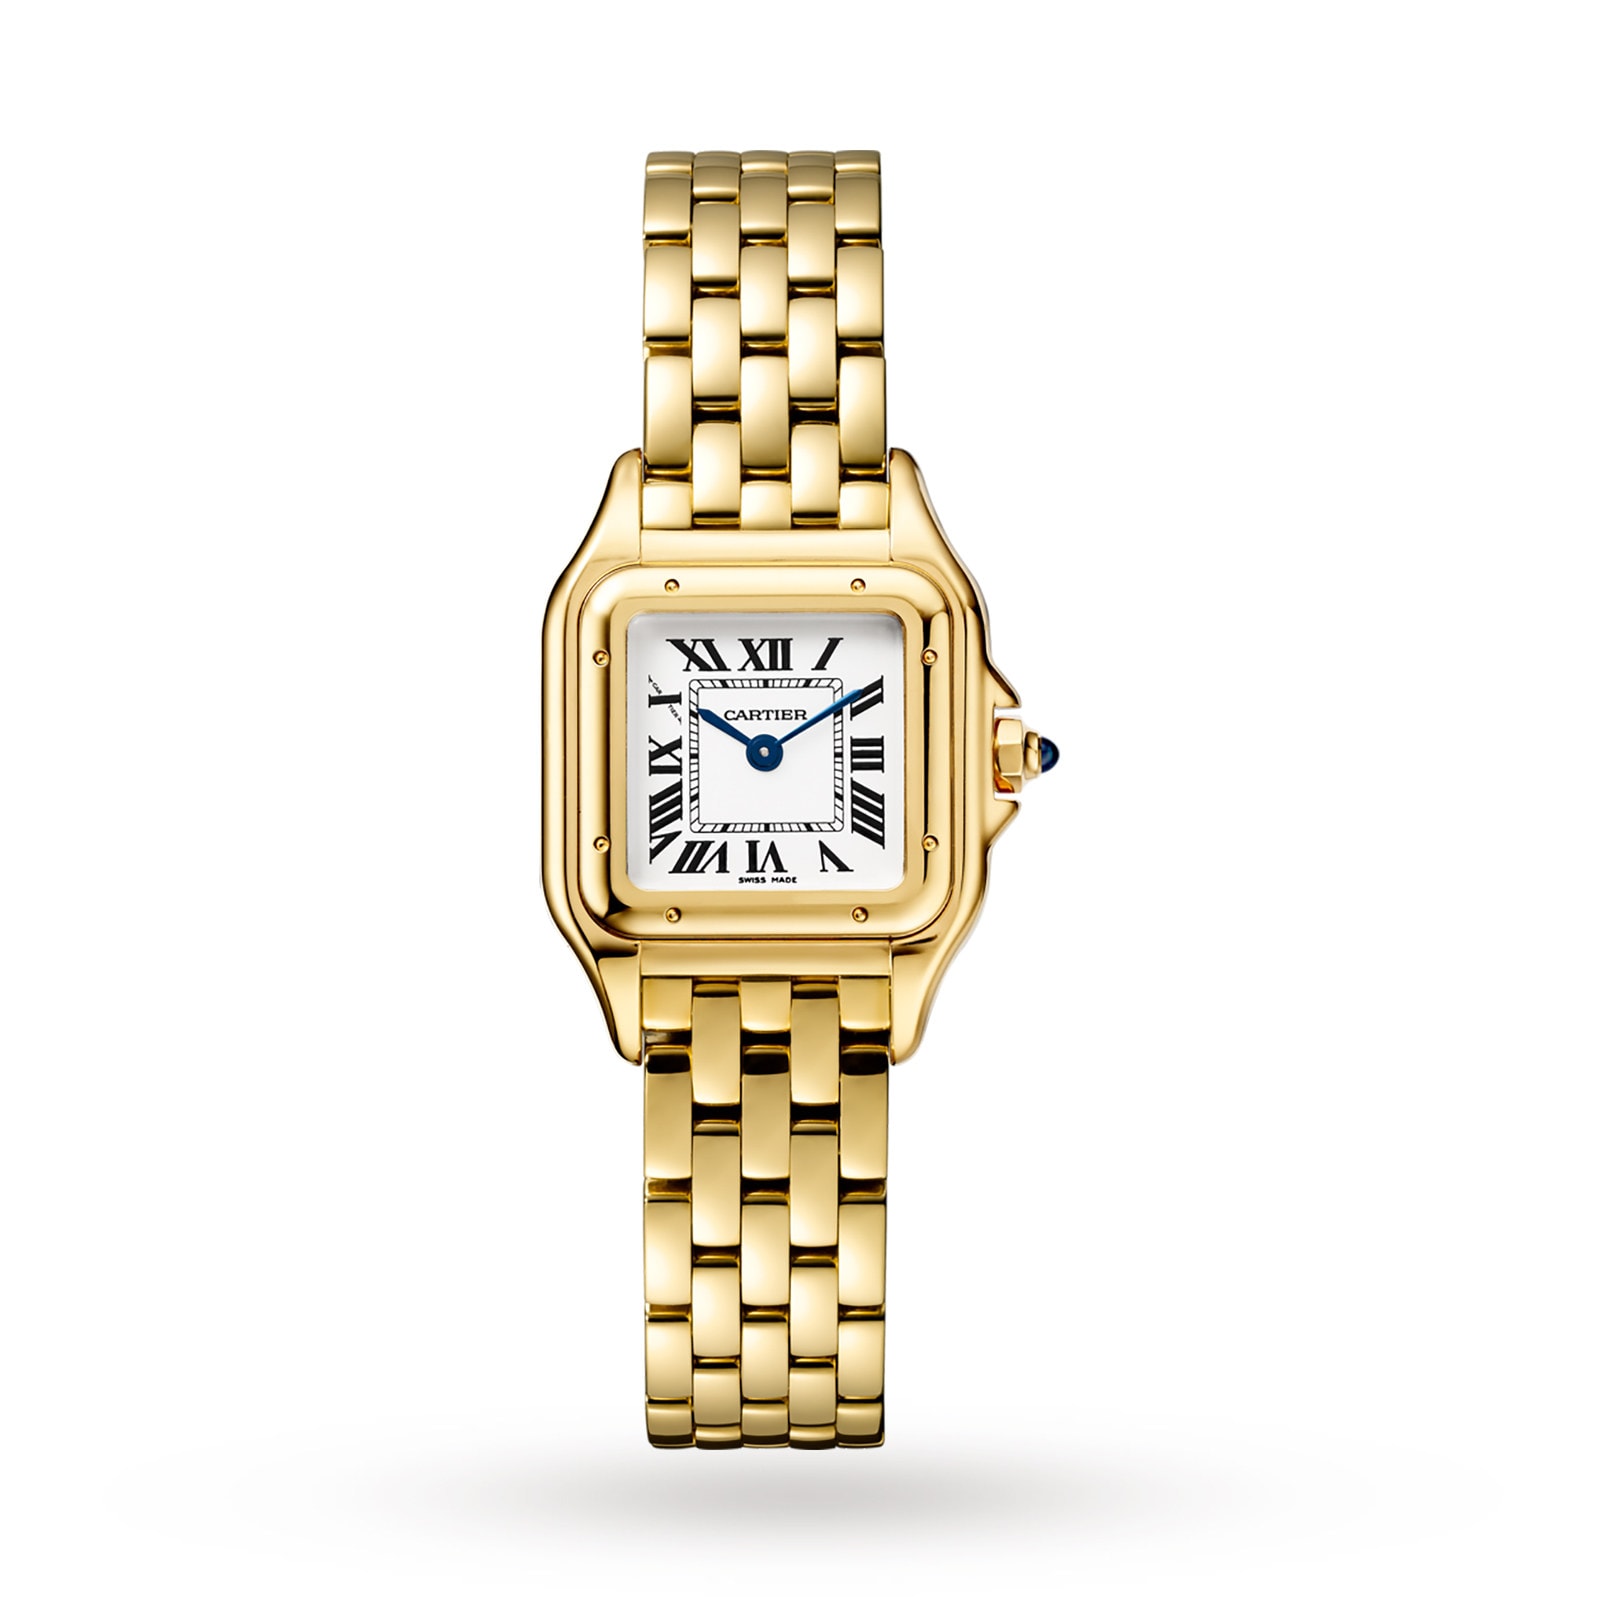 gold cartier watches